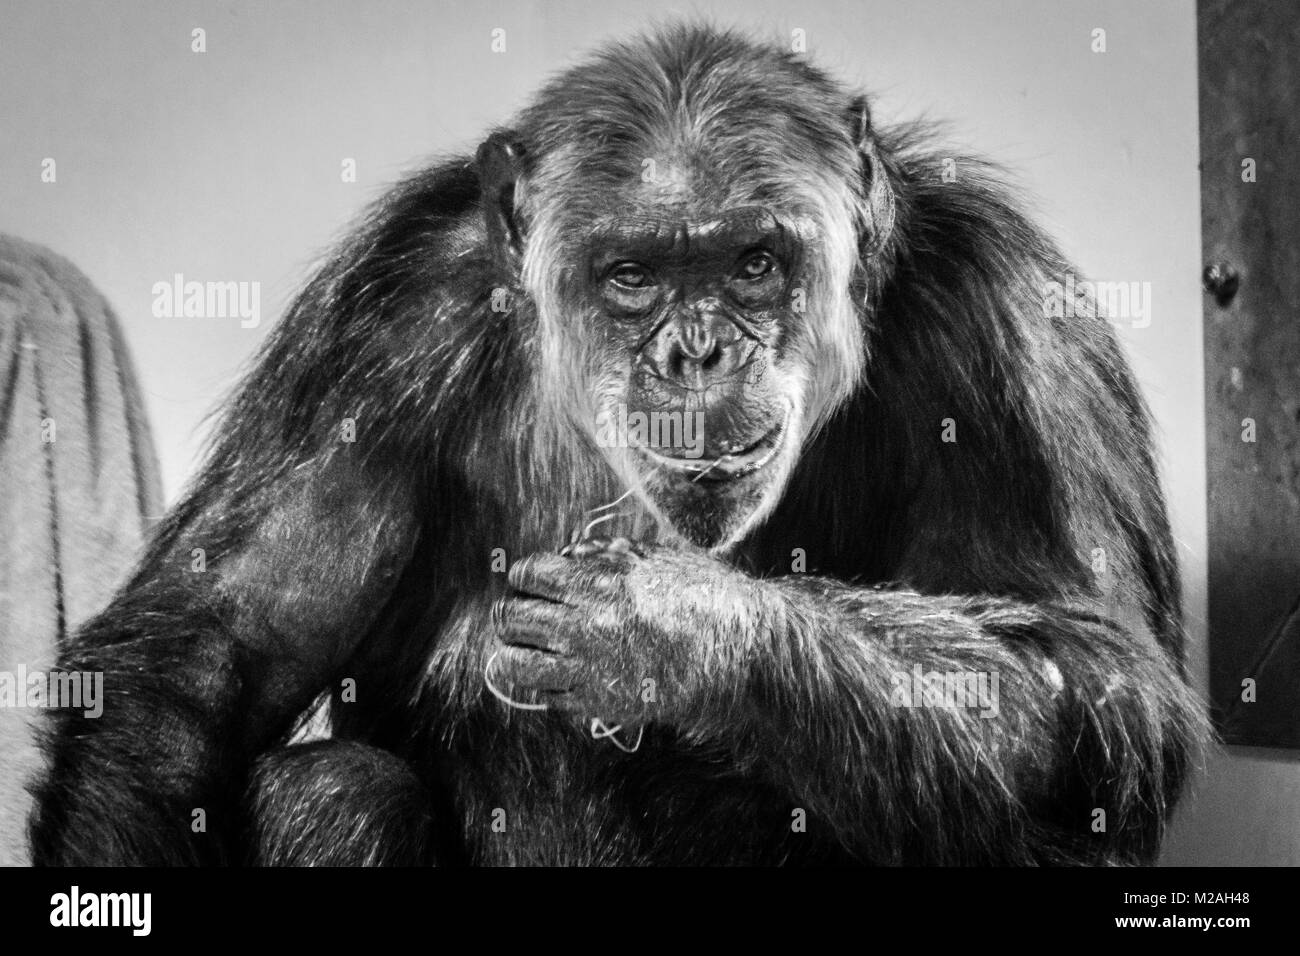 Chimpanzee staring at camera, shot in black and white Stock Photo